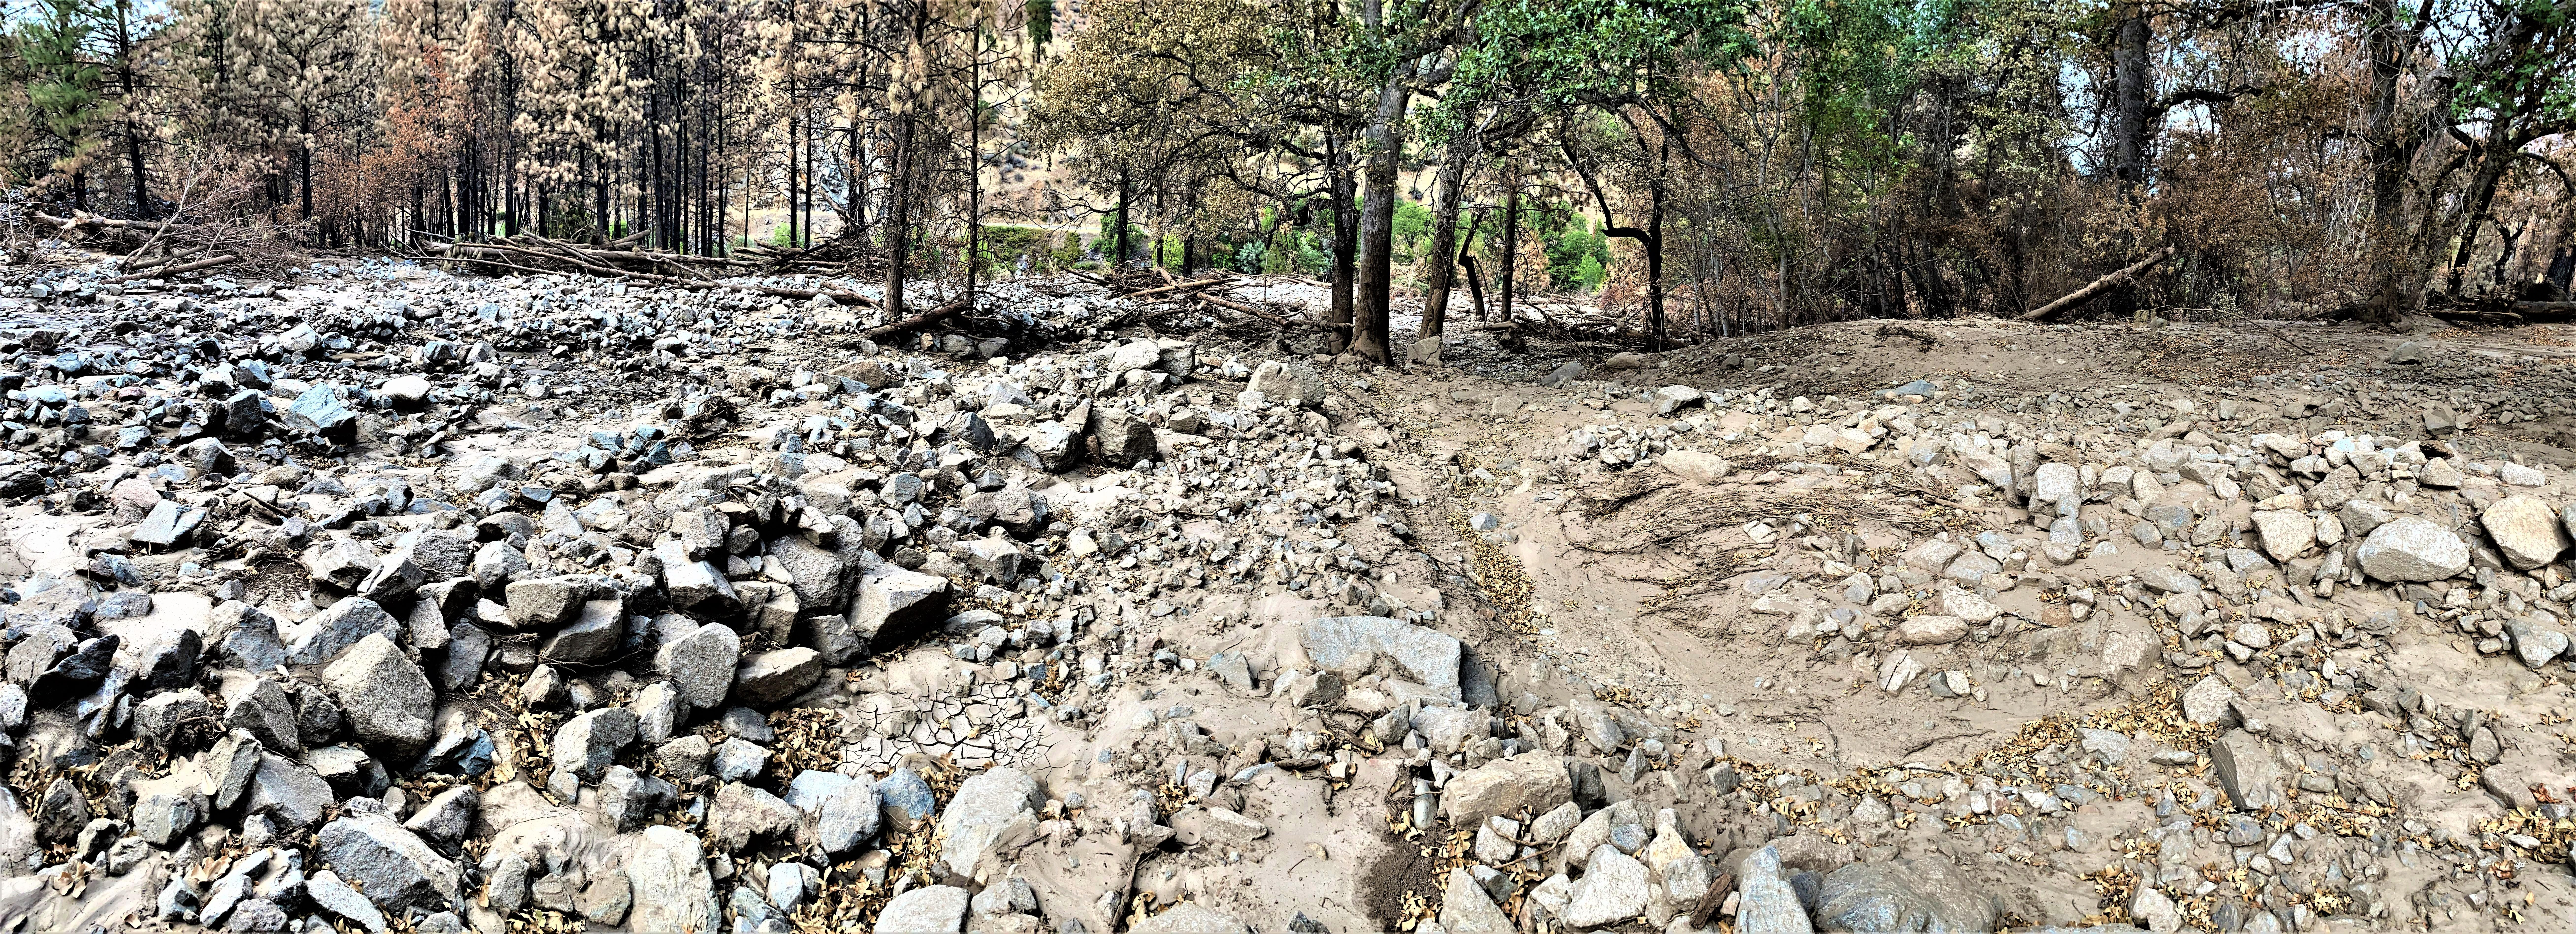 Image showing past debris flow deposits near the confluence of Vesa Creek and the Klamath River